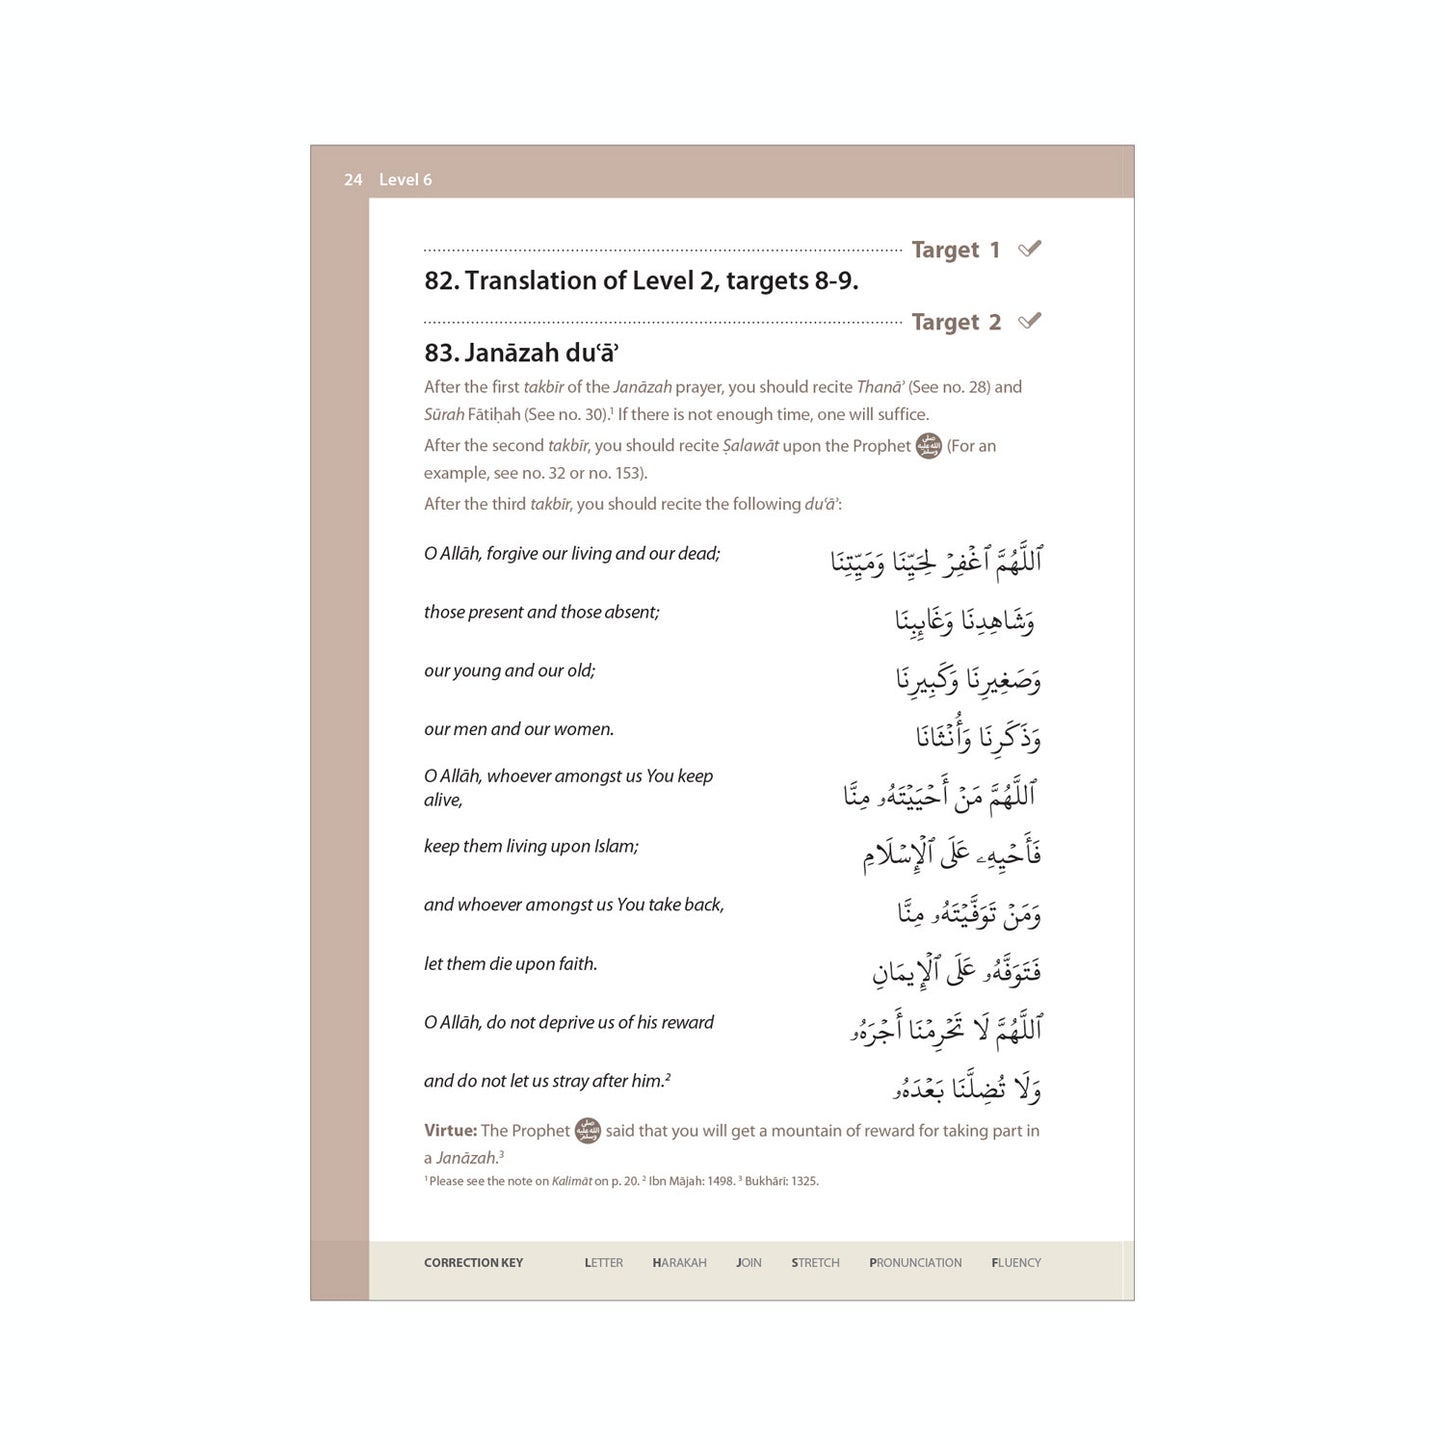 Essential Duas and Surahs: Book 2 – Learn by Heart Series by Safar (Madinah 15 Line Script)